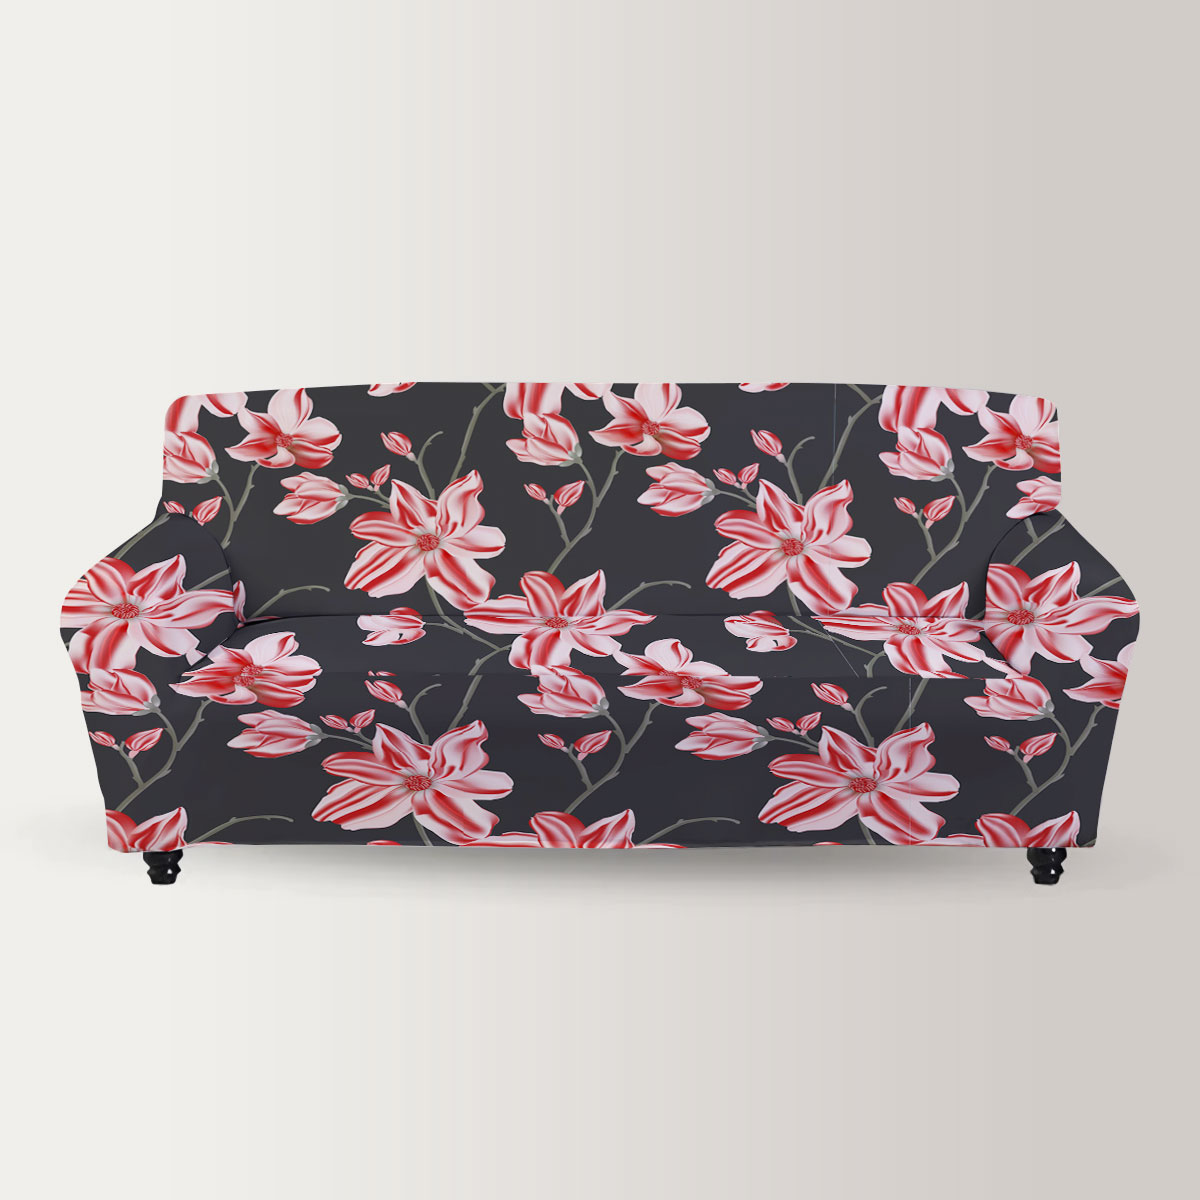 Red Magnolia Flower Sofa Cover